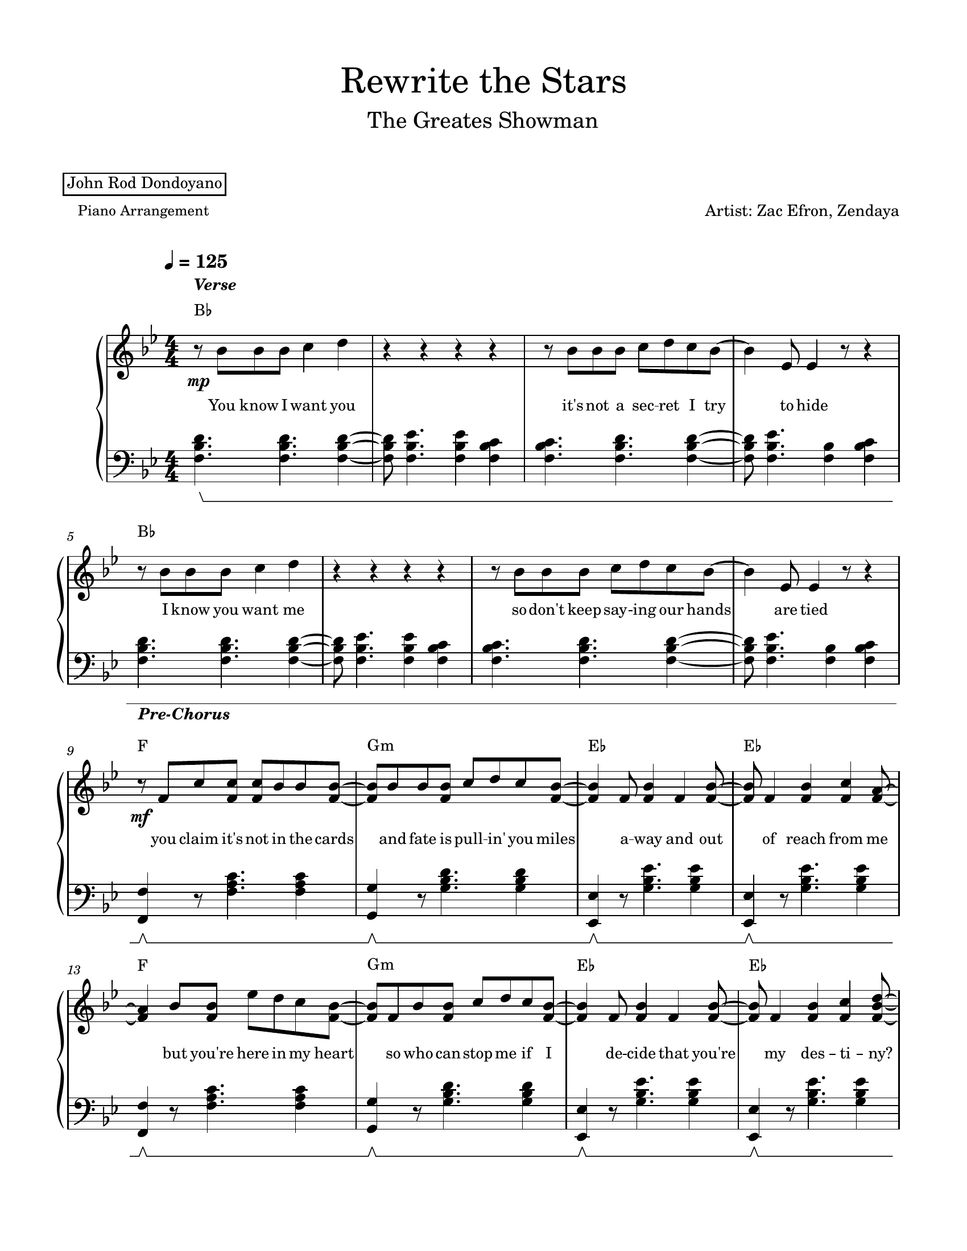 Zac Efron, Zendya - Rewrite the Stars (PIANO SHEET) by John Rod Dondoyano